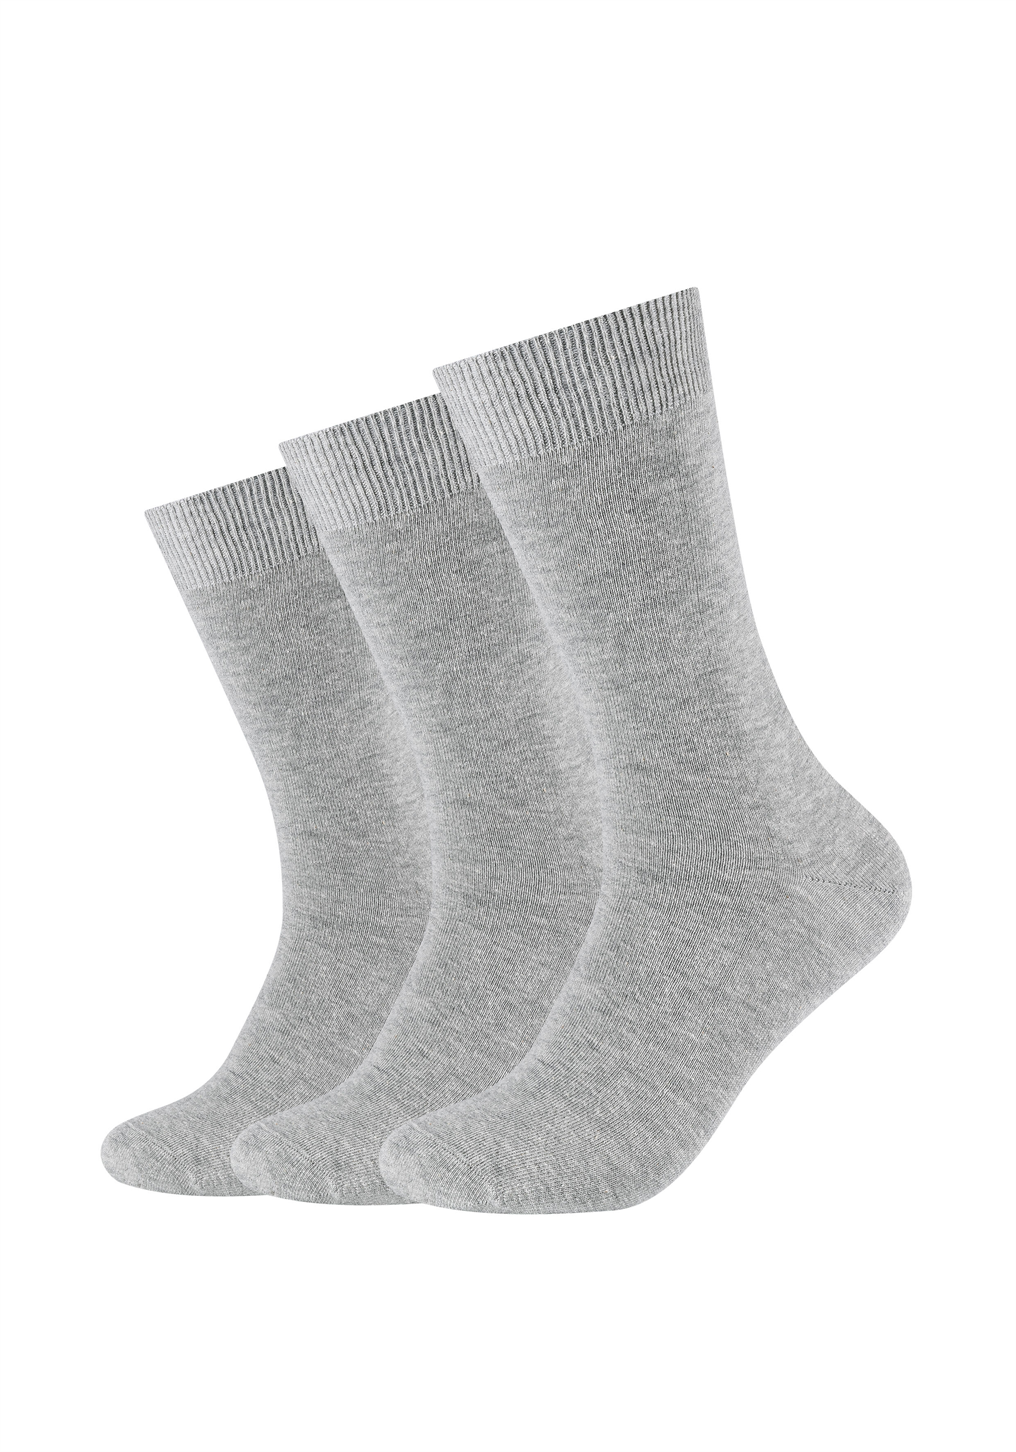 Unisex comfort cotton Socks 3p - 000003403